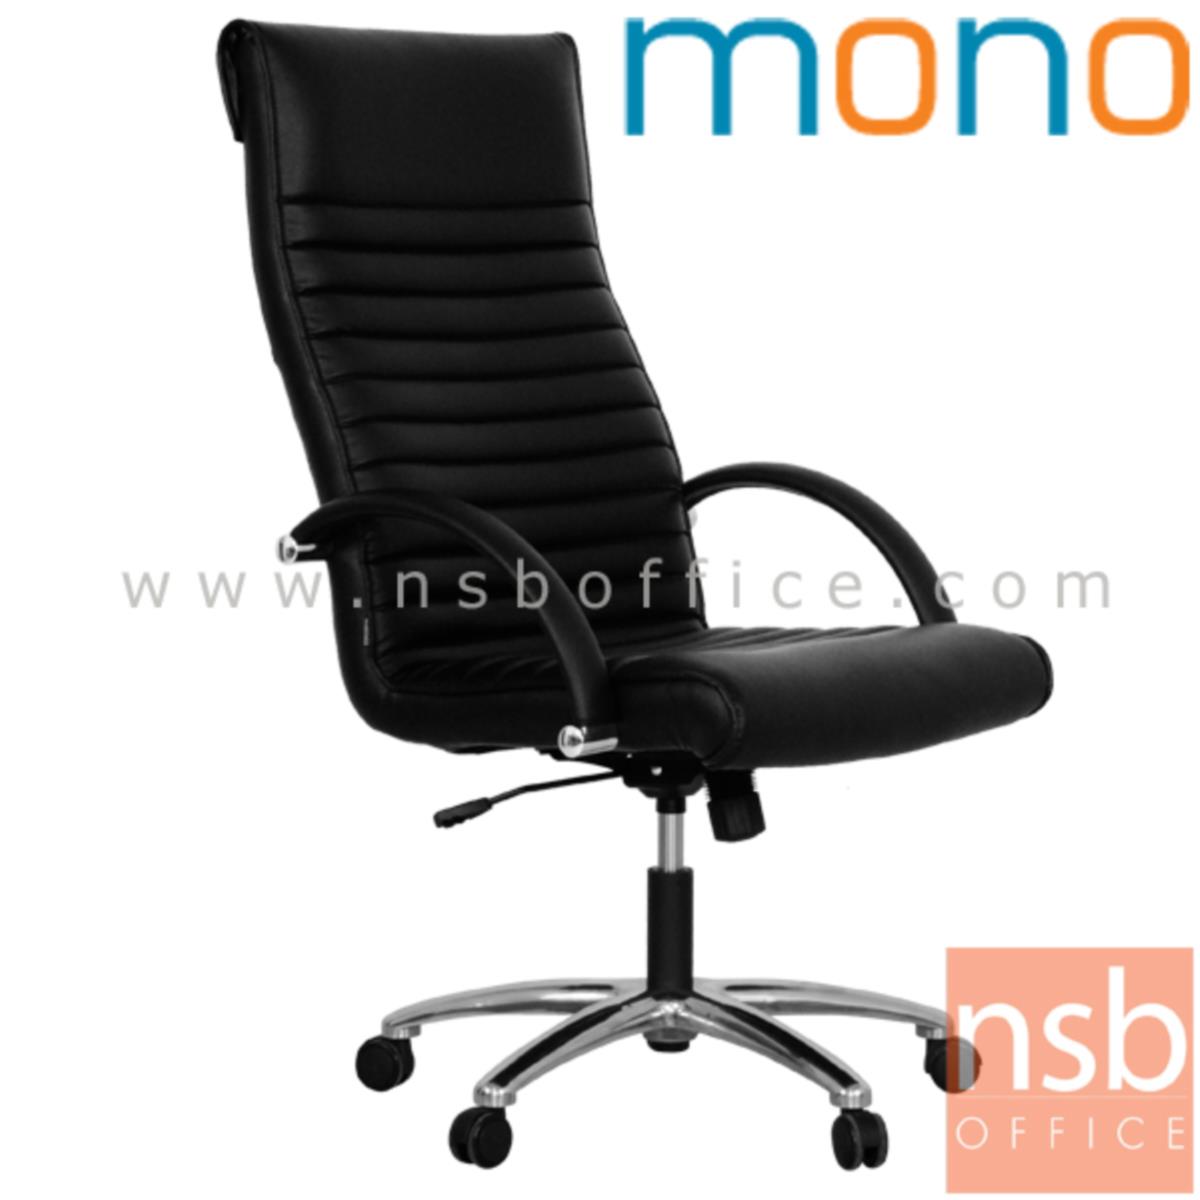 B01A386:เก้าอี้ผู้บริหาร รุ่น Marque (มาร์ค)  โช๊คแก๊ส มีก้อนโยก ขาอลูมิเนียม